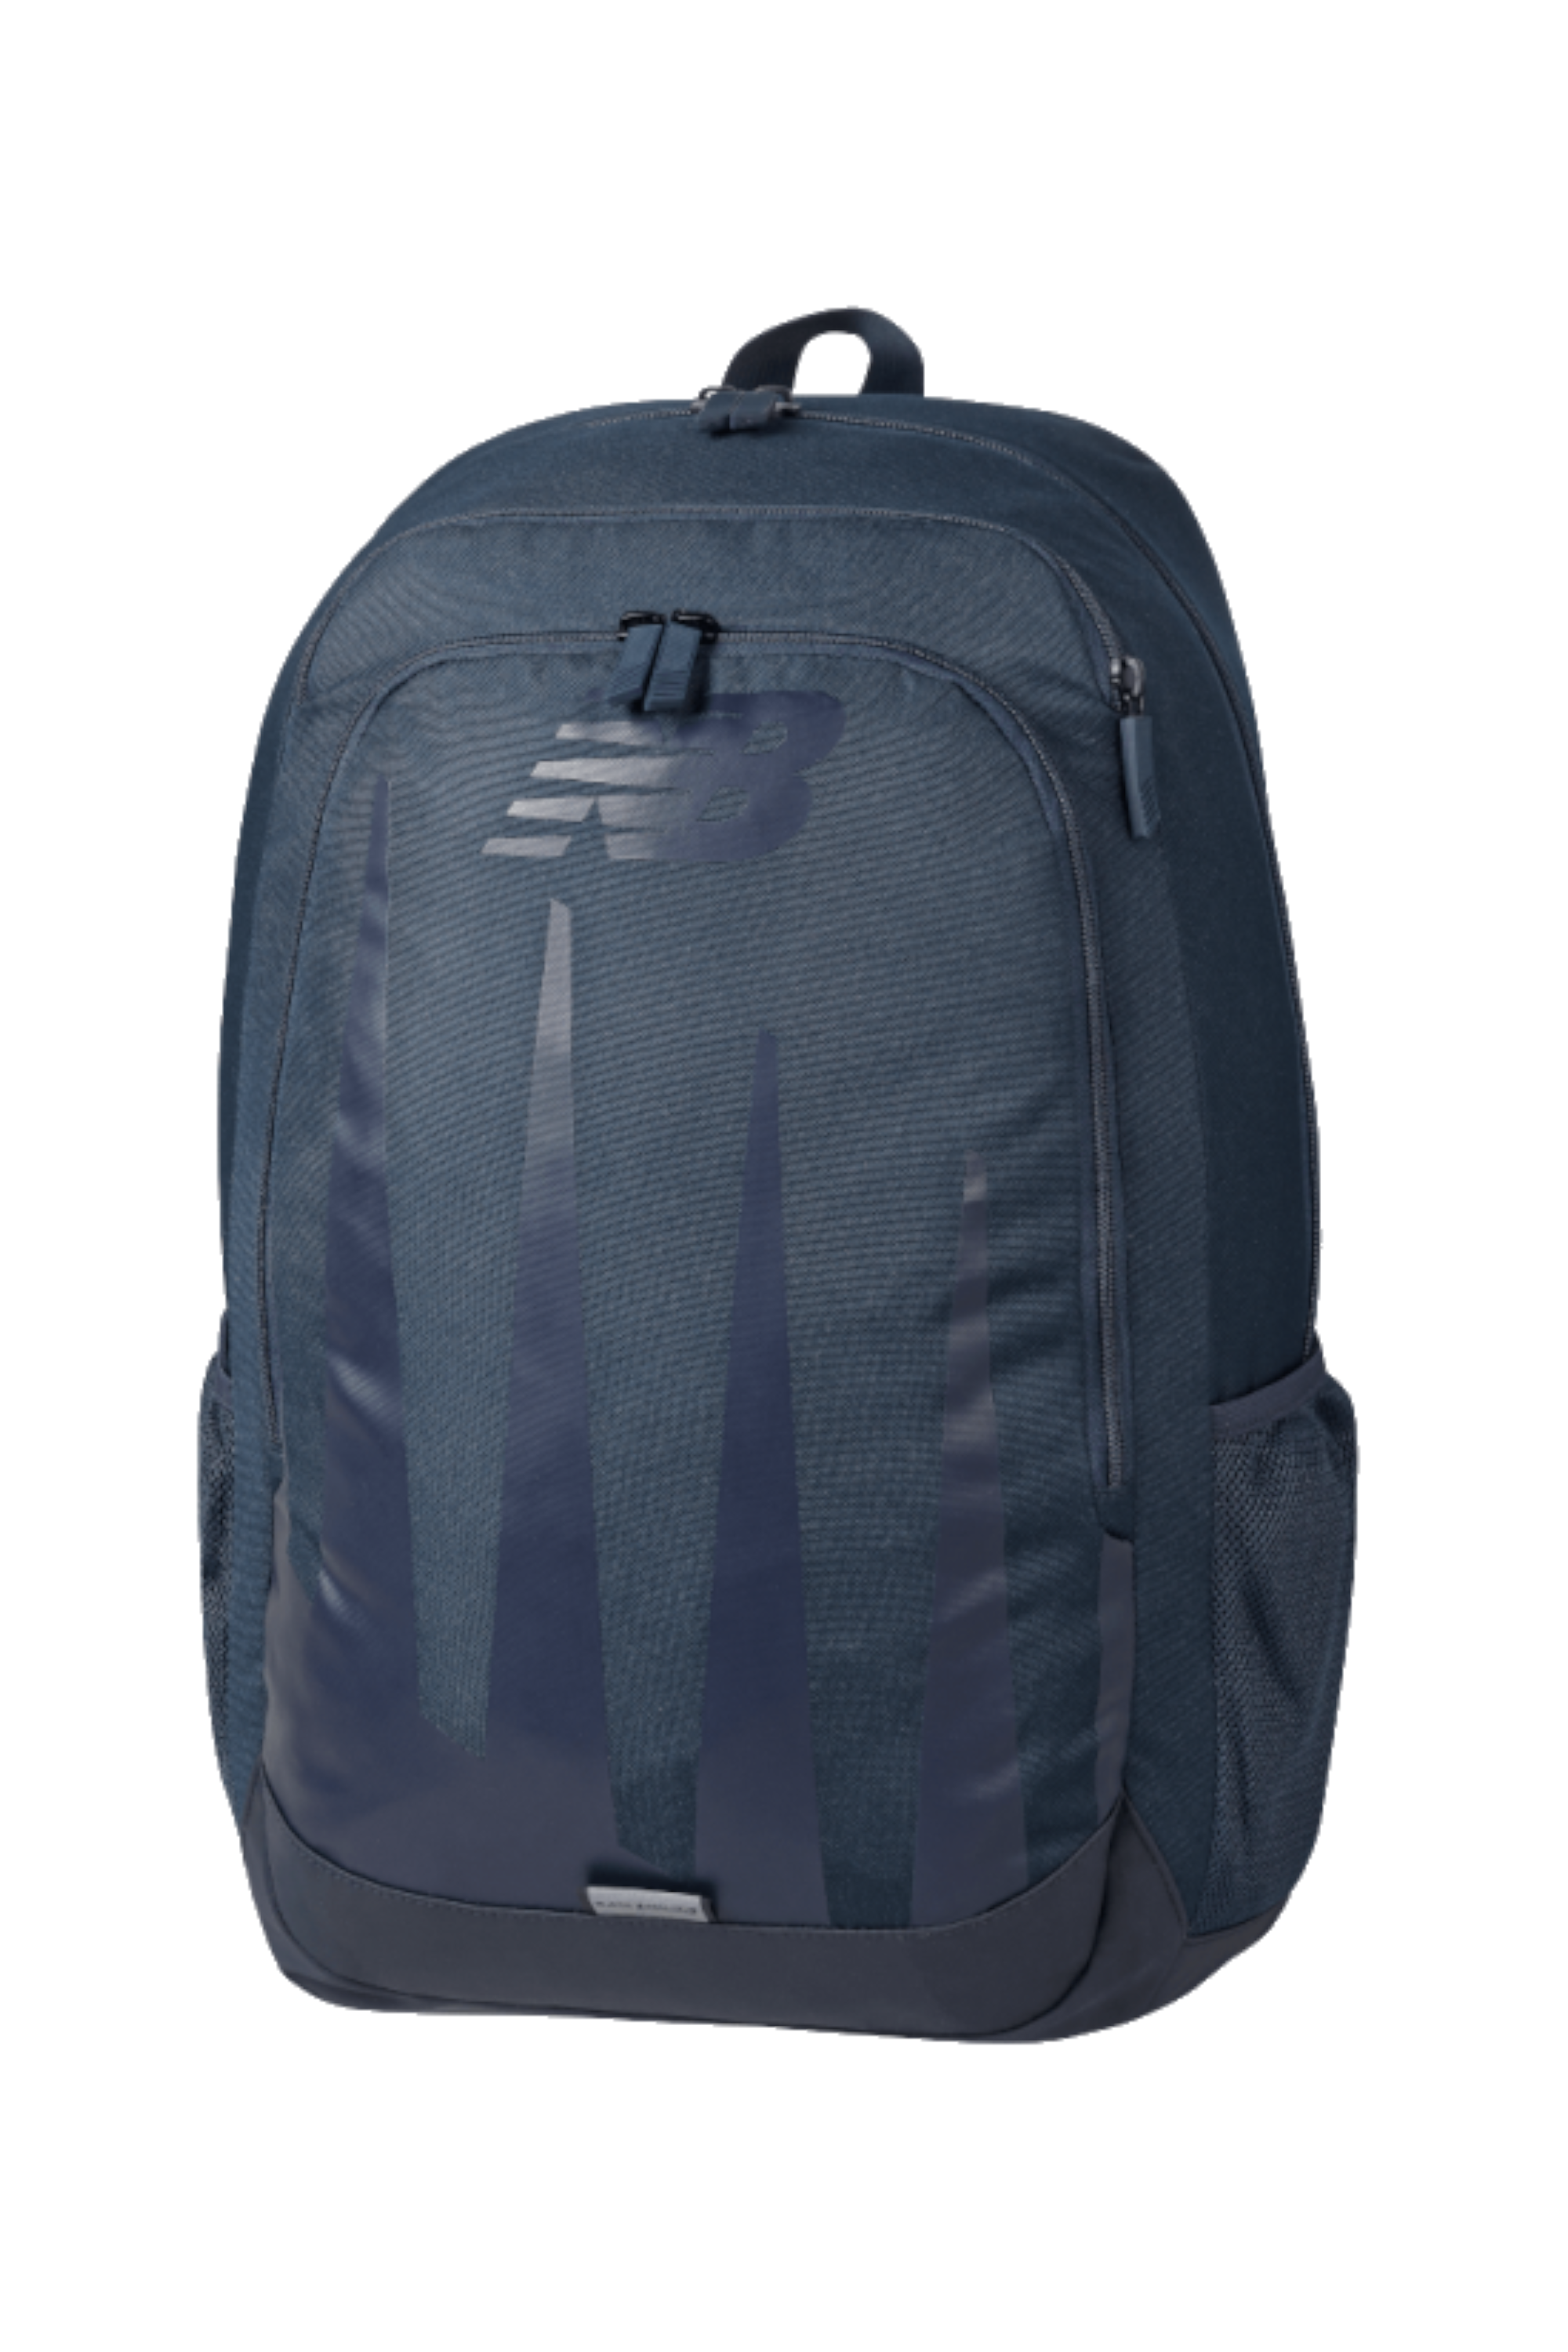 new balance laptop backpack